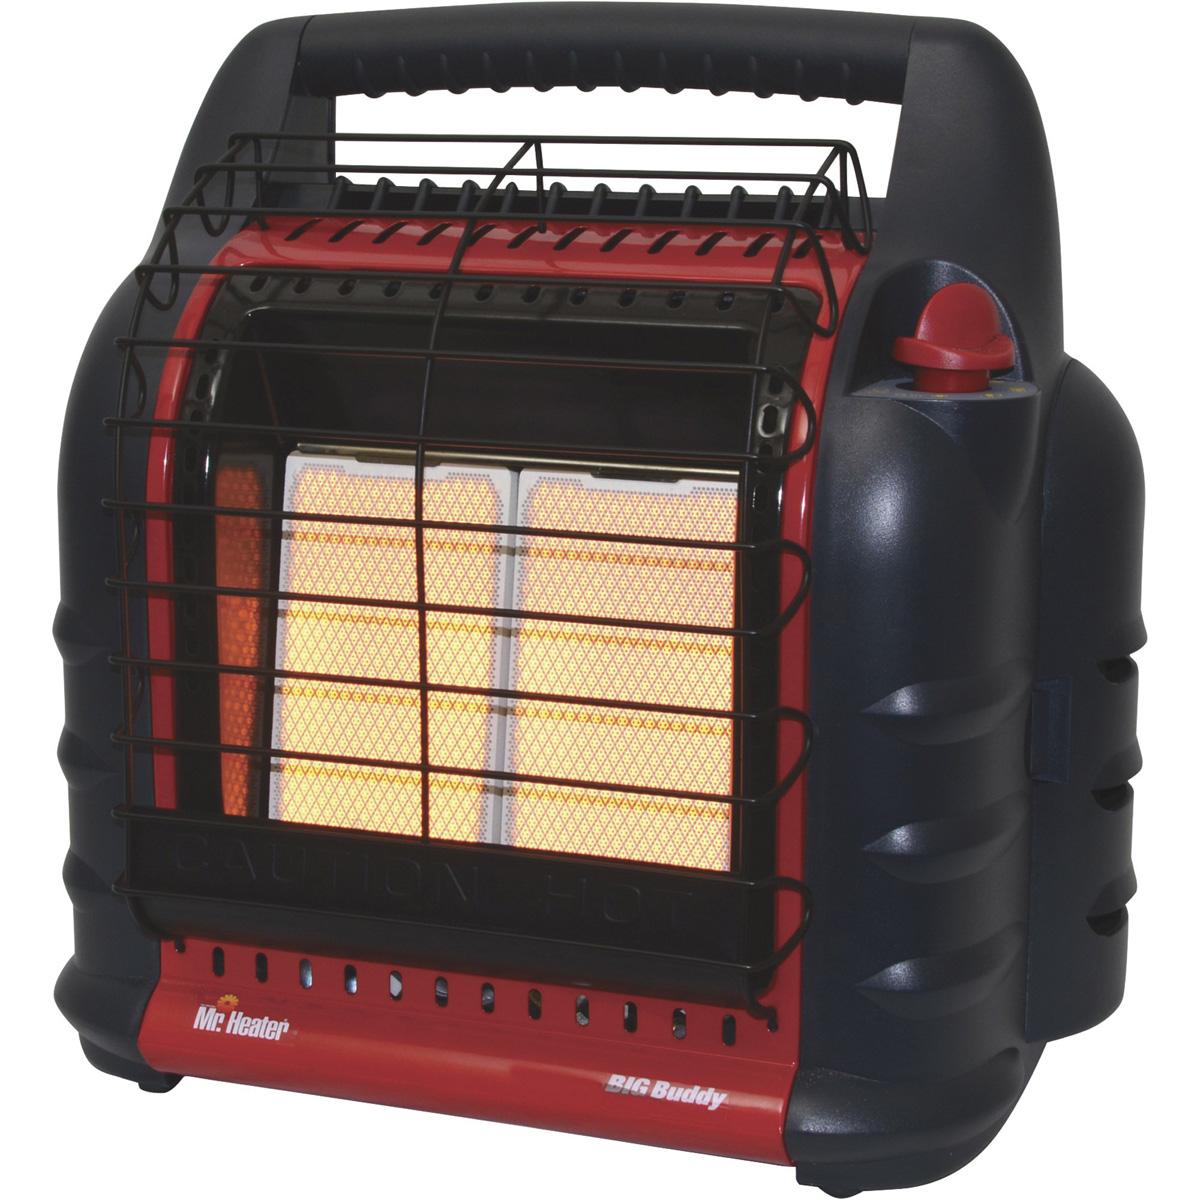 Mr Heater 18K BTU Big Buddy Portable Propane Heater for $99.99 Shipped